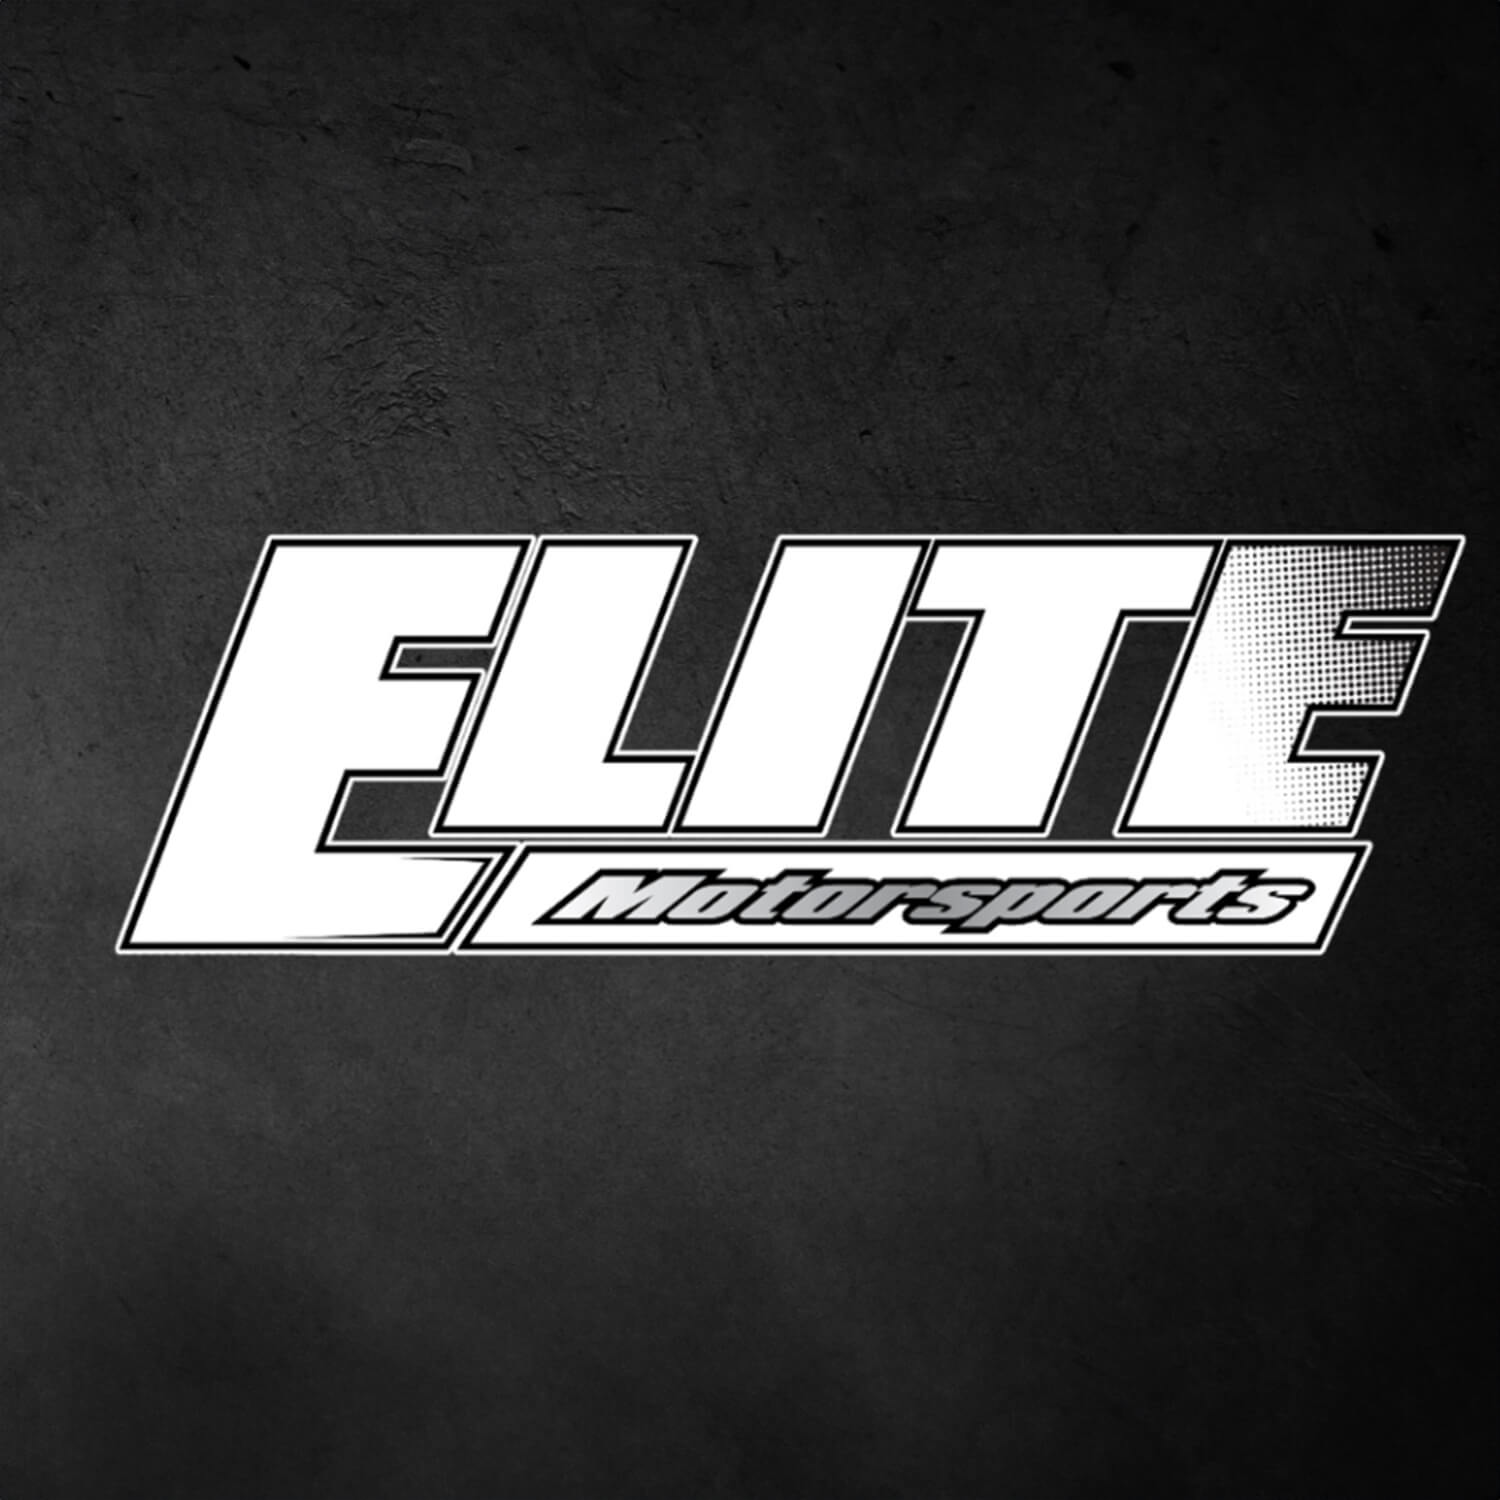 Elite Motorsports logo